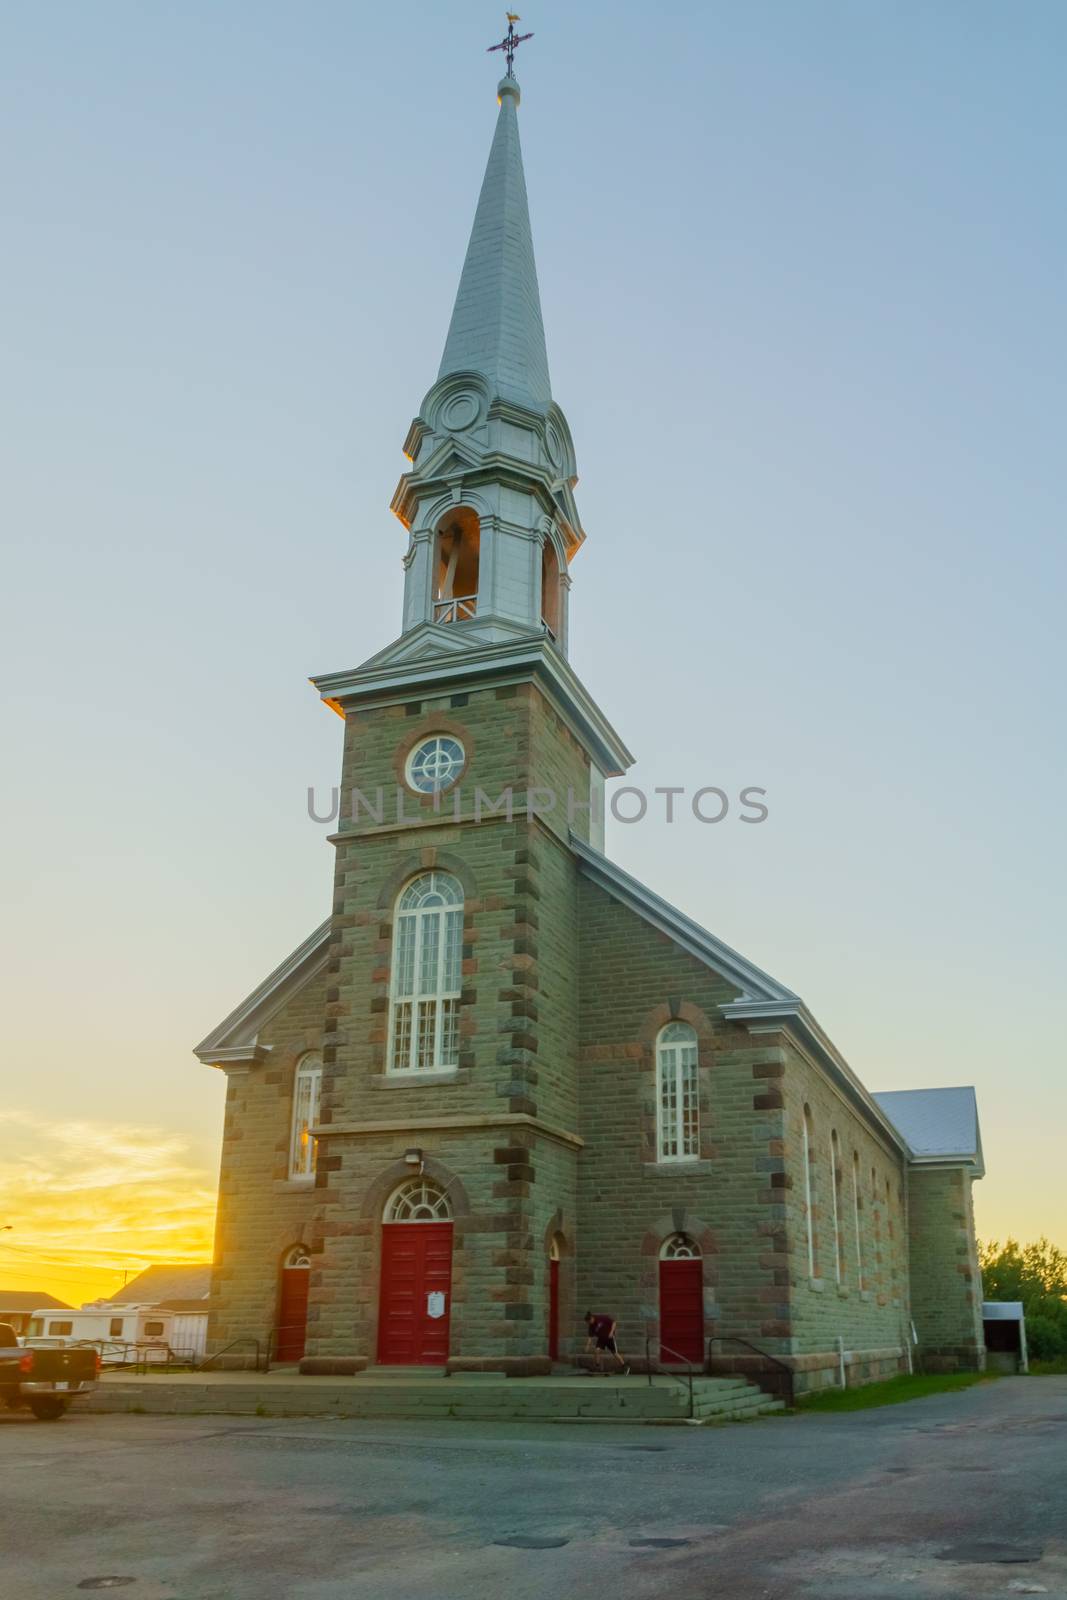 Sunset view of the Saint-Edouard Catholic church, in Les Mechins, Gaspe Peninsula, Quebec, Canada